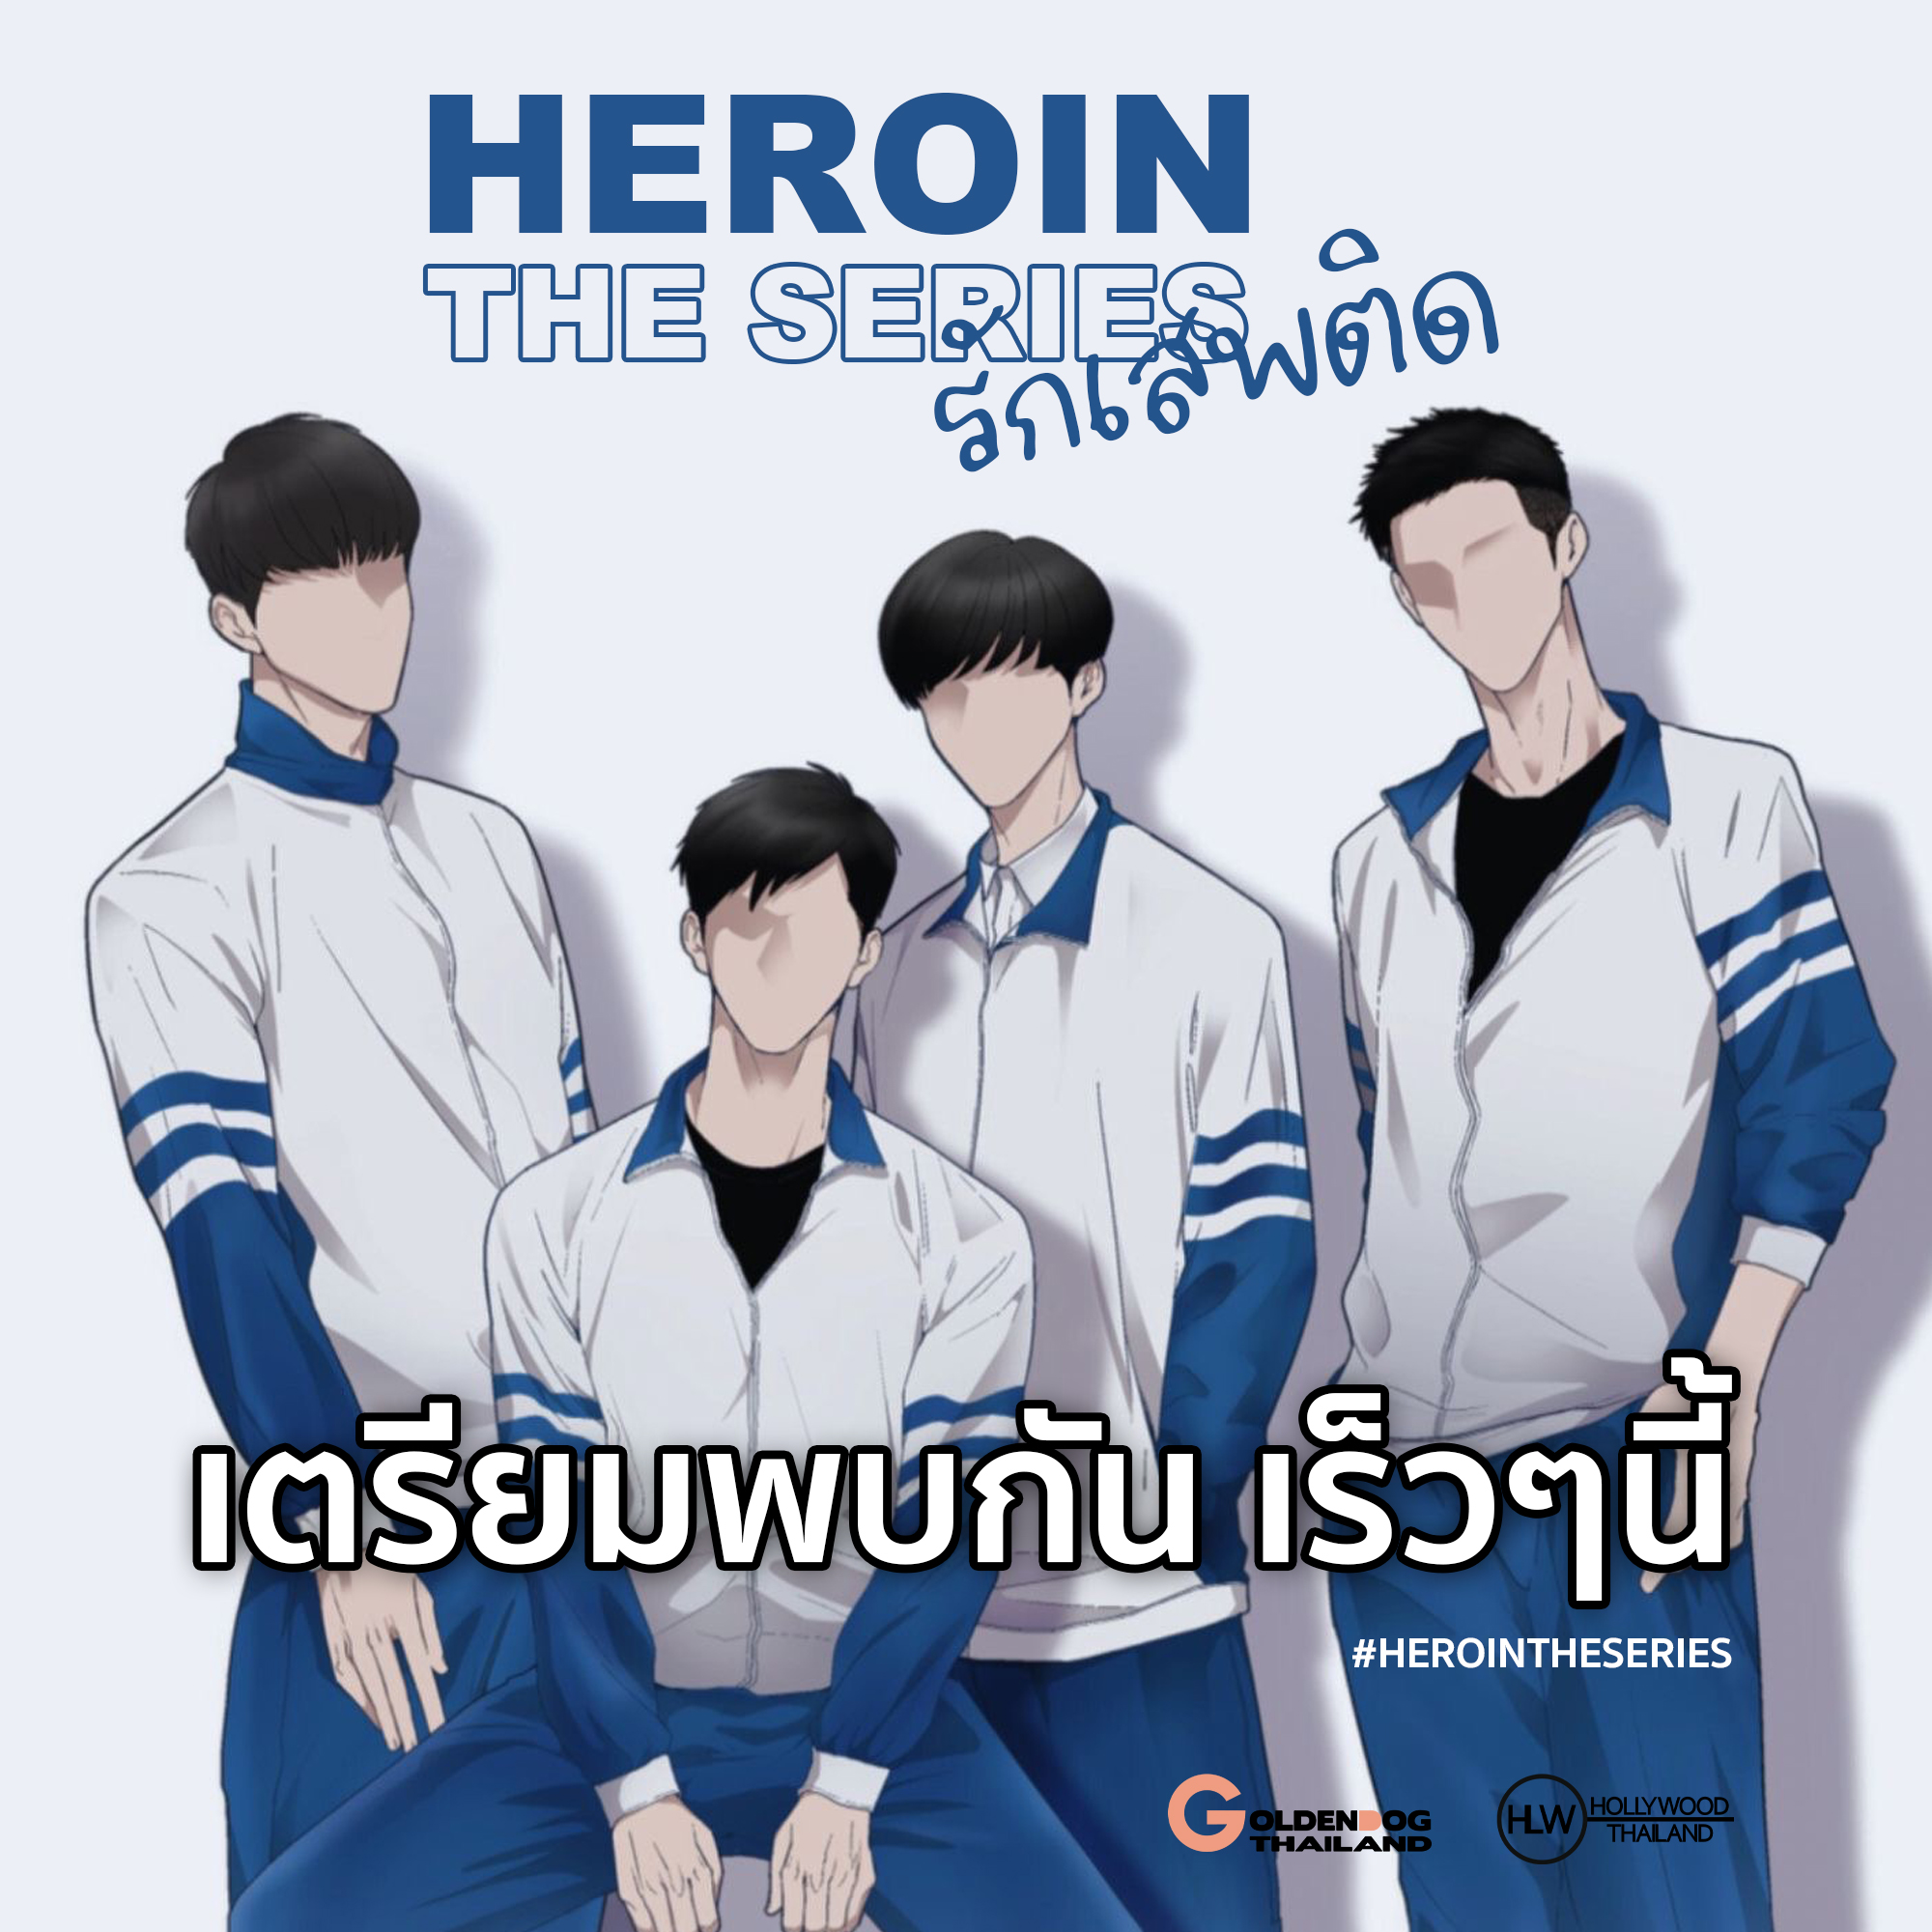 Heroin The Series